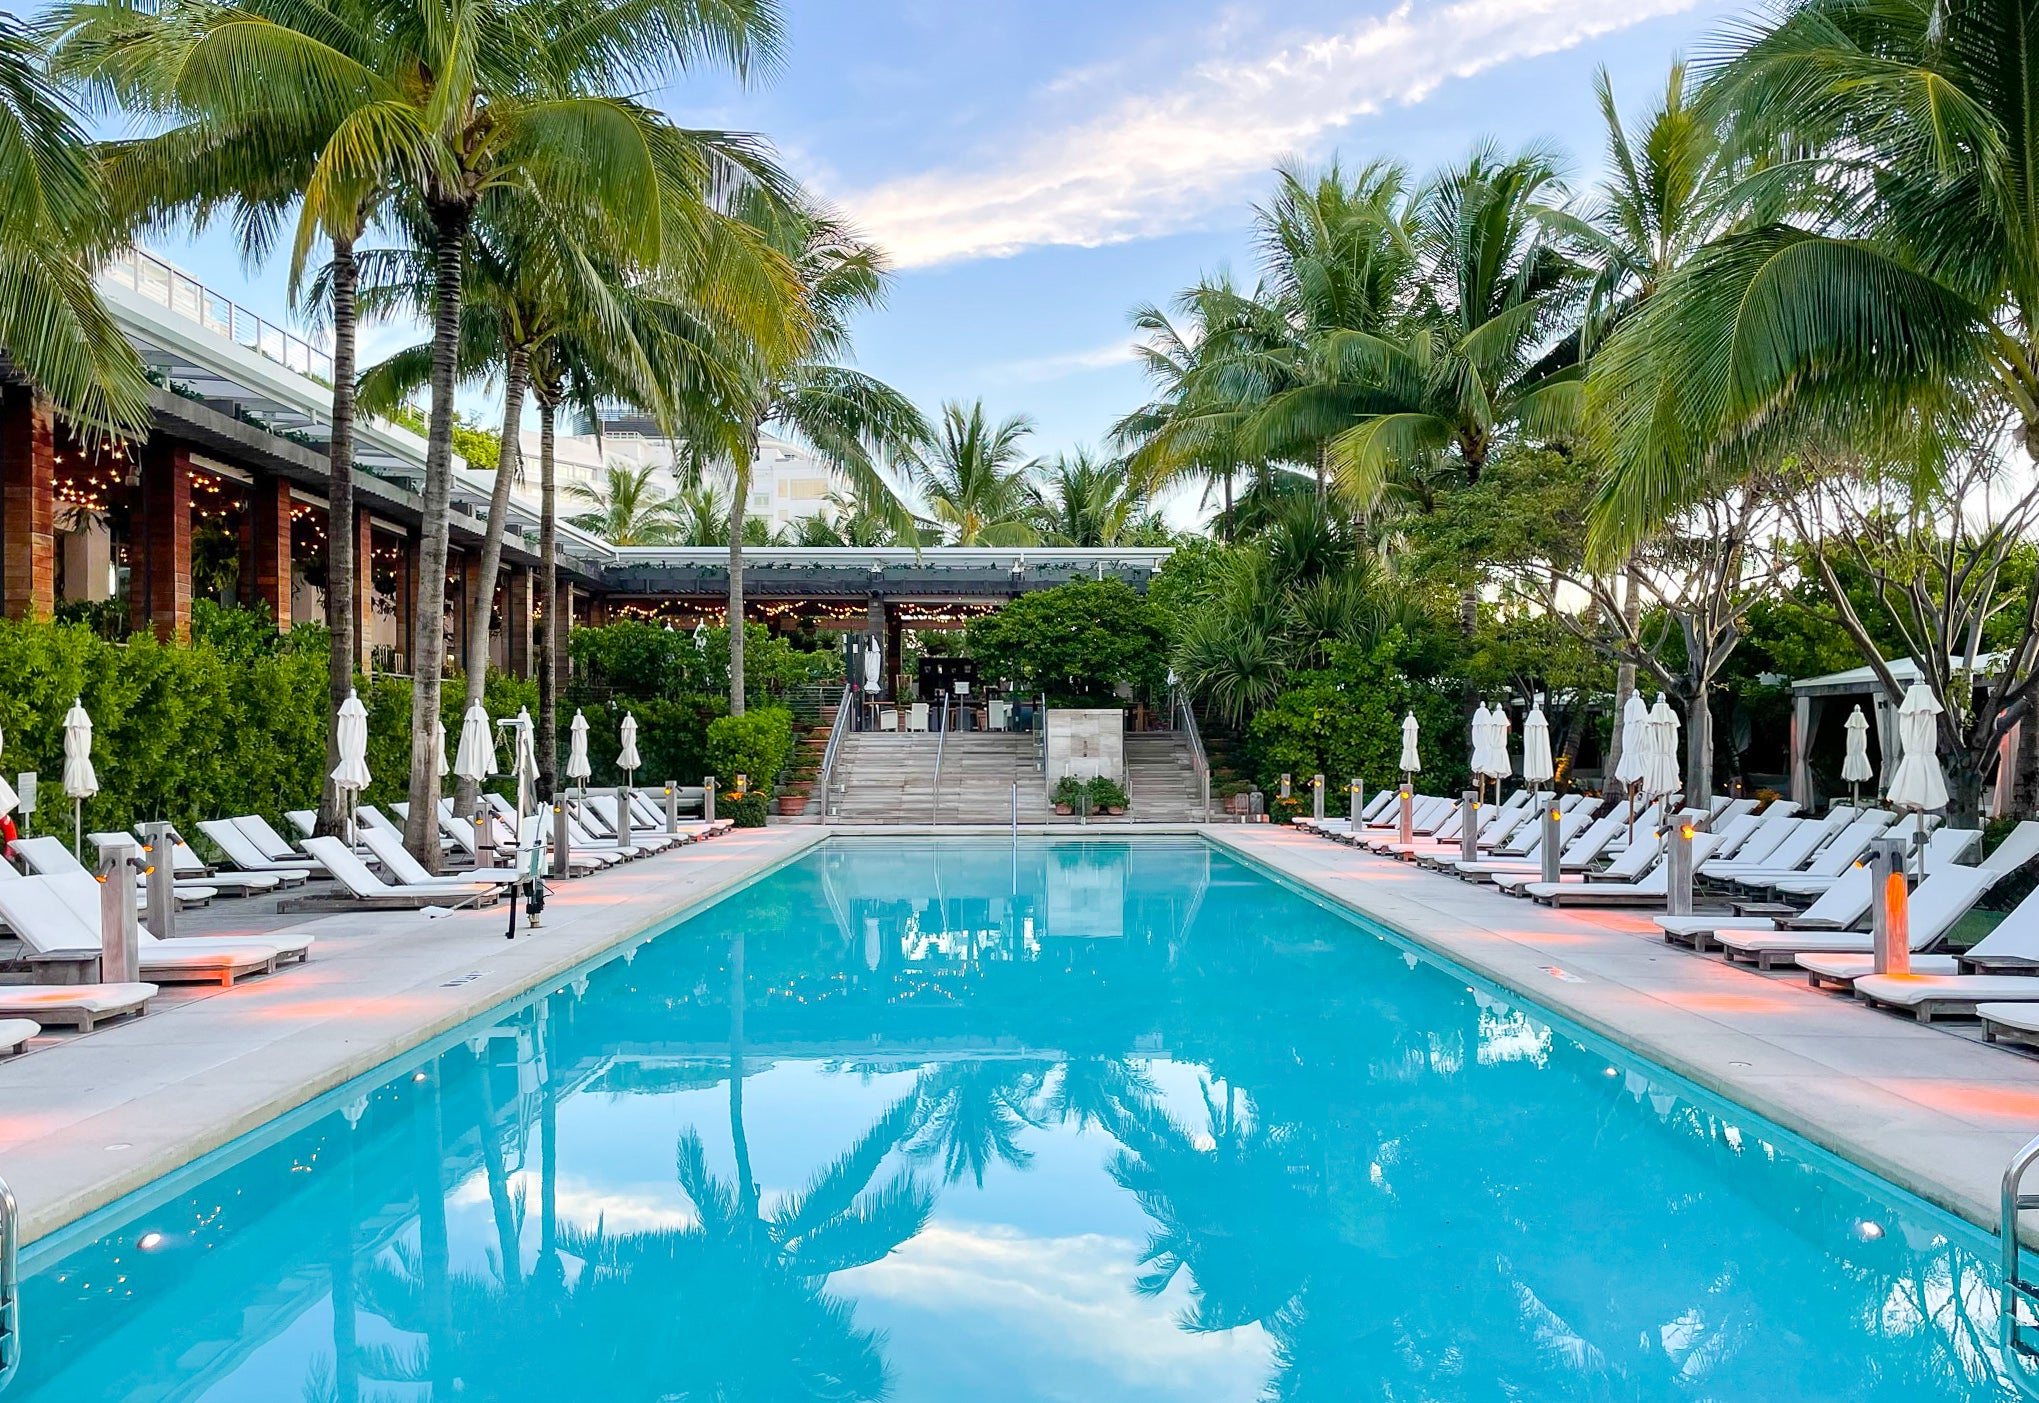 The Miami Beach EDITION Modern Pool